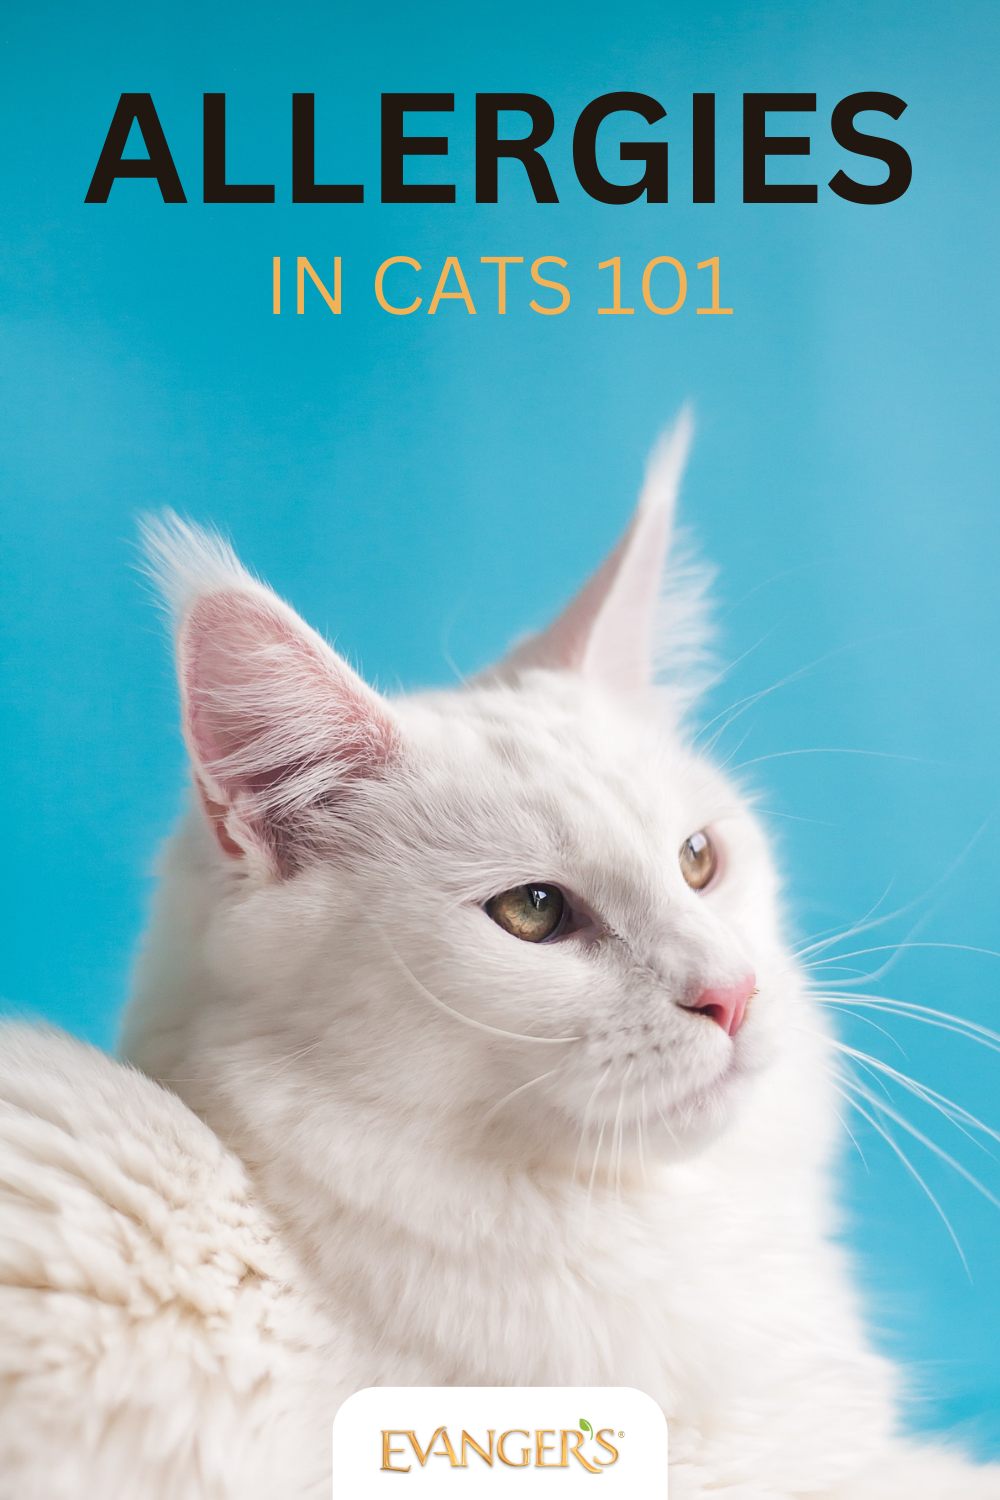 Allergies in Cats 101